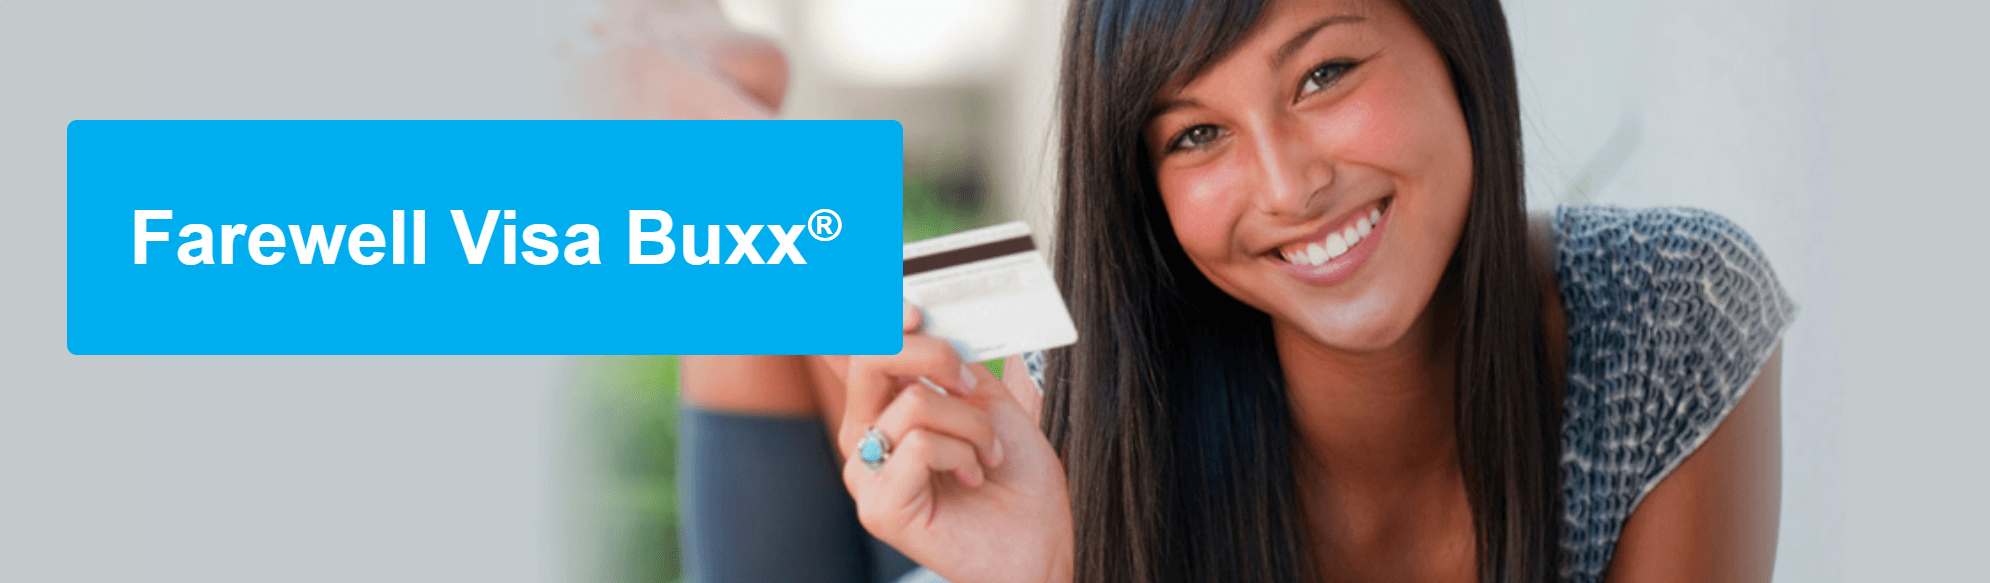 Farewell Visa Buxx sign with woman holding debit card